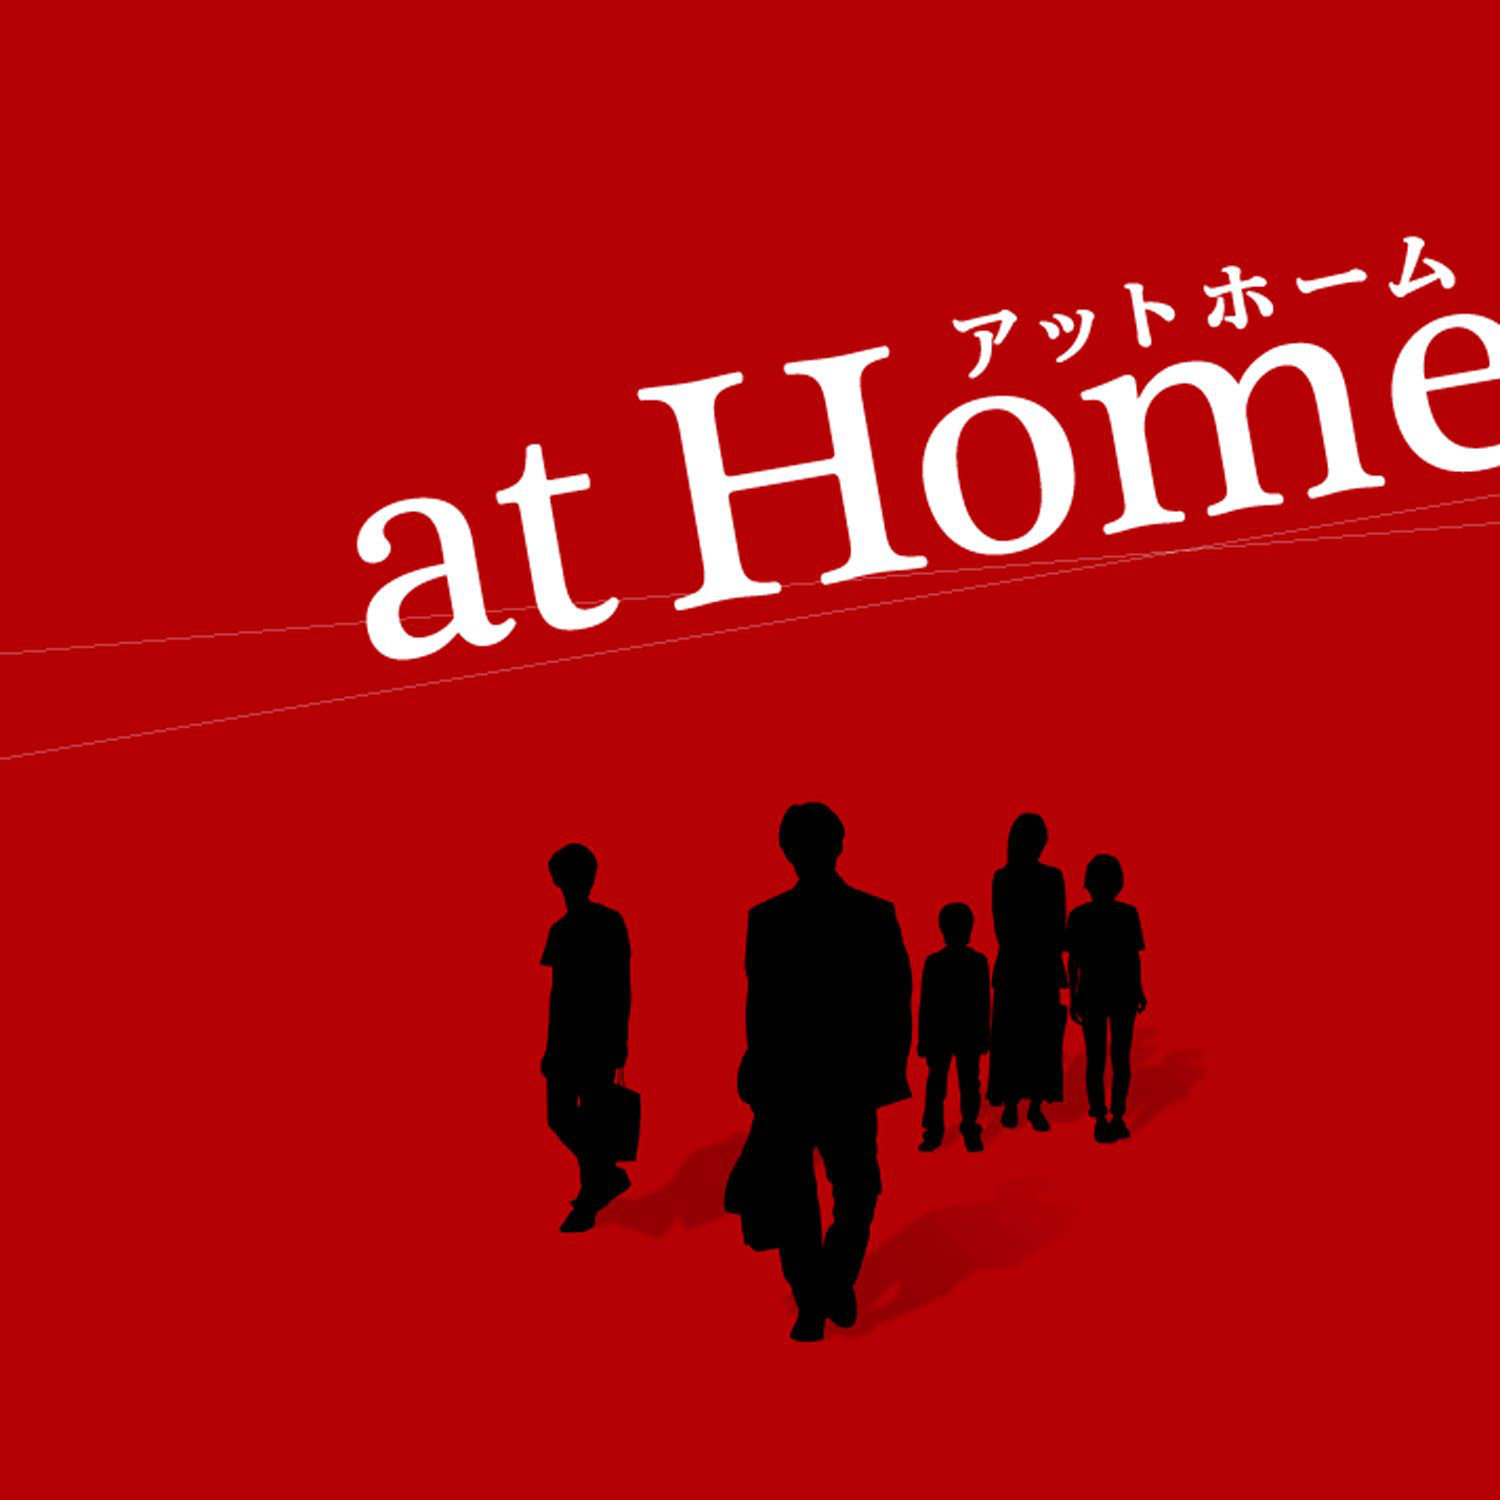 Обложка понедельник Home Original. Home soundtrack